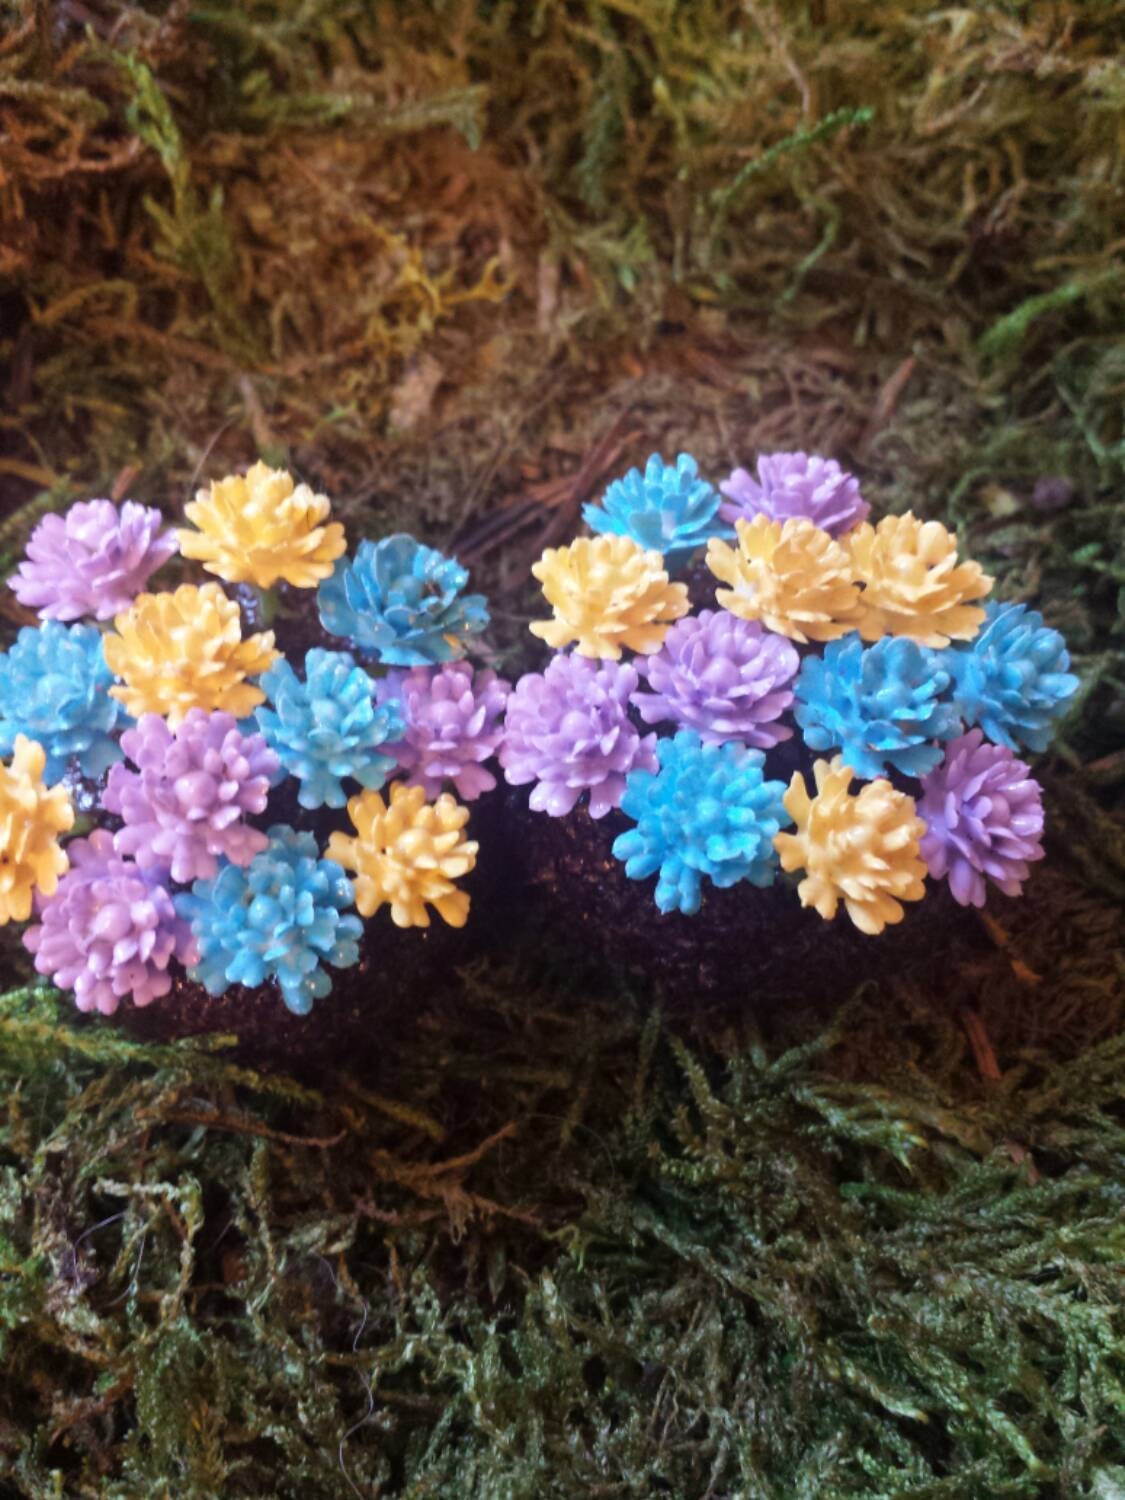 Fairy garden miniature flower beds. Set of 2 with purple